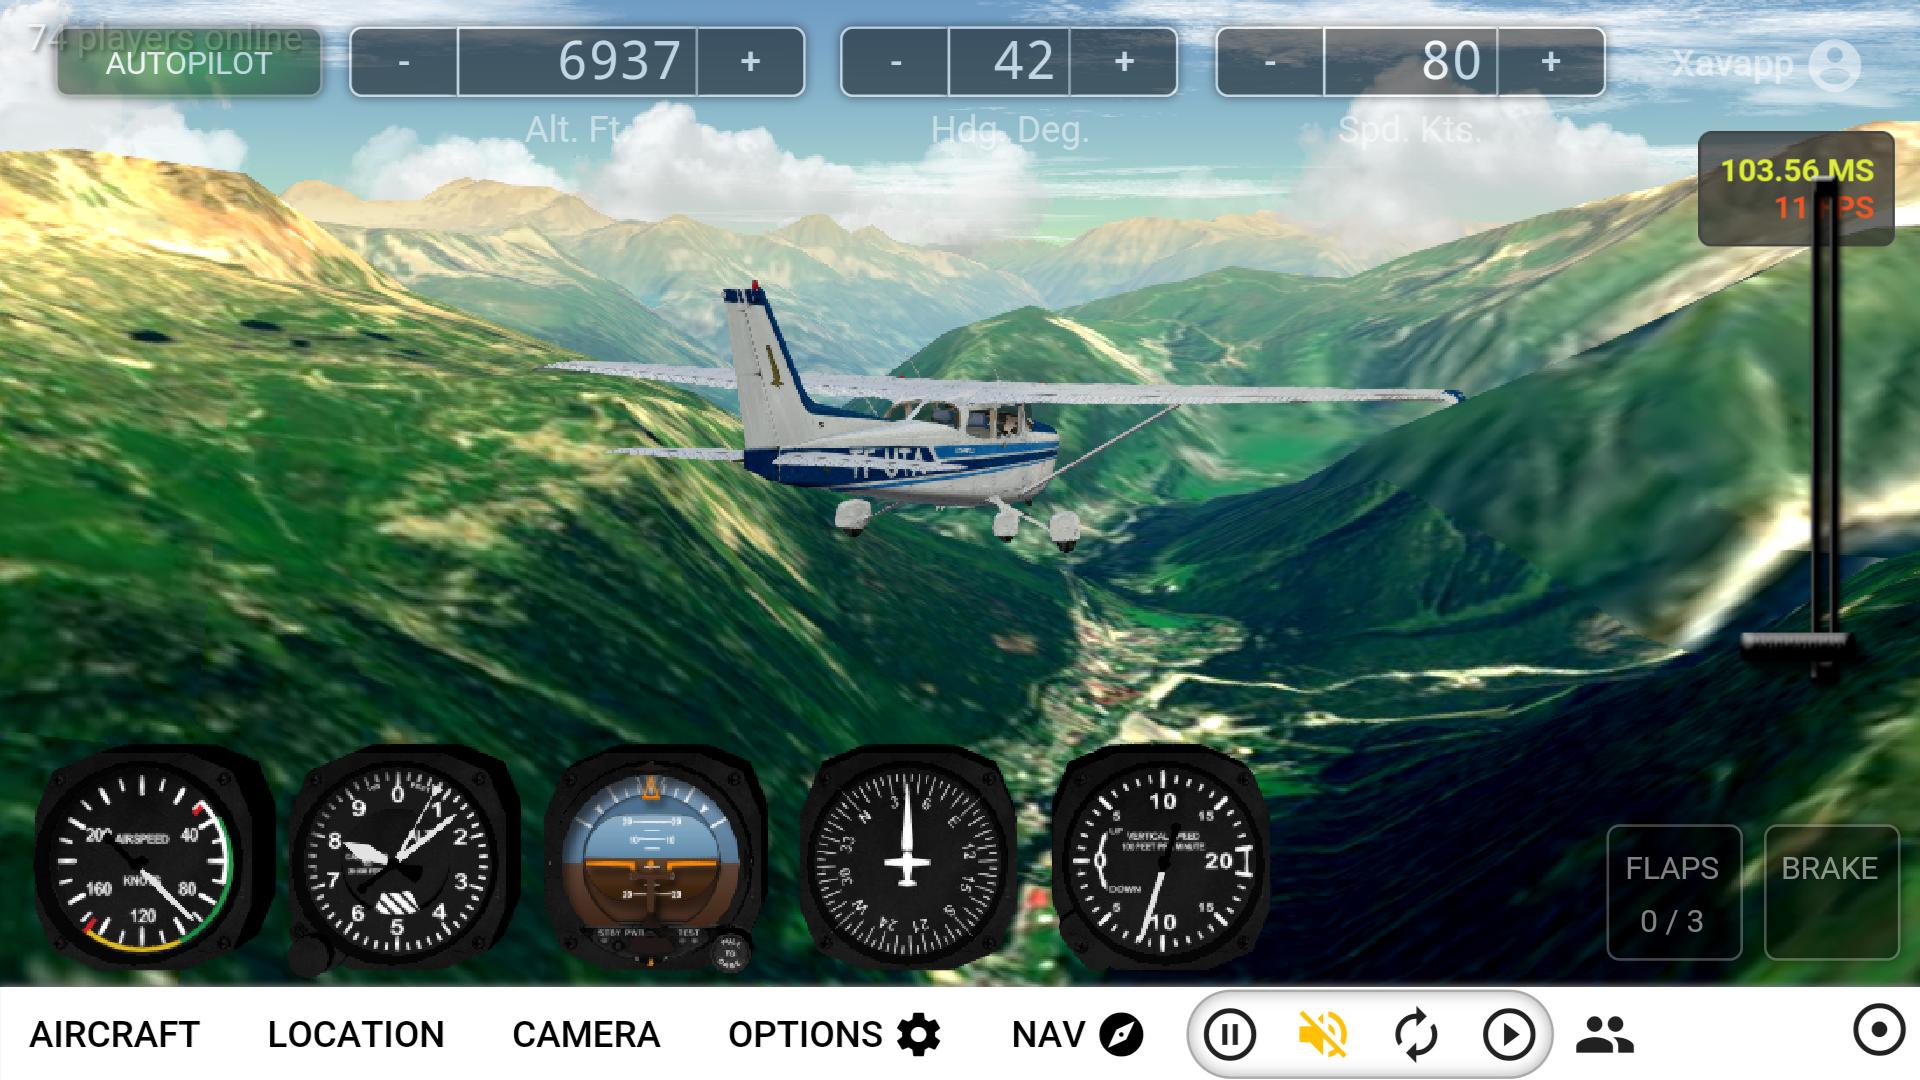 GeoFS - Free Online Flight Simulator